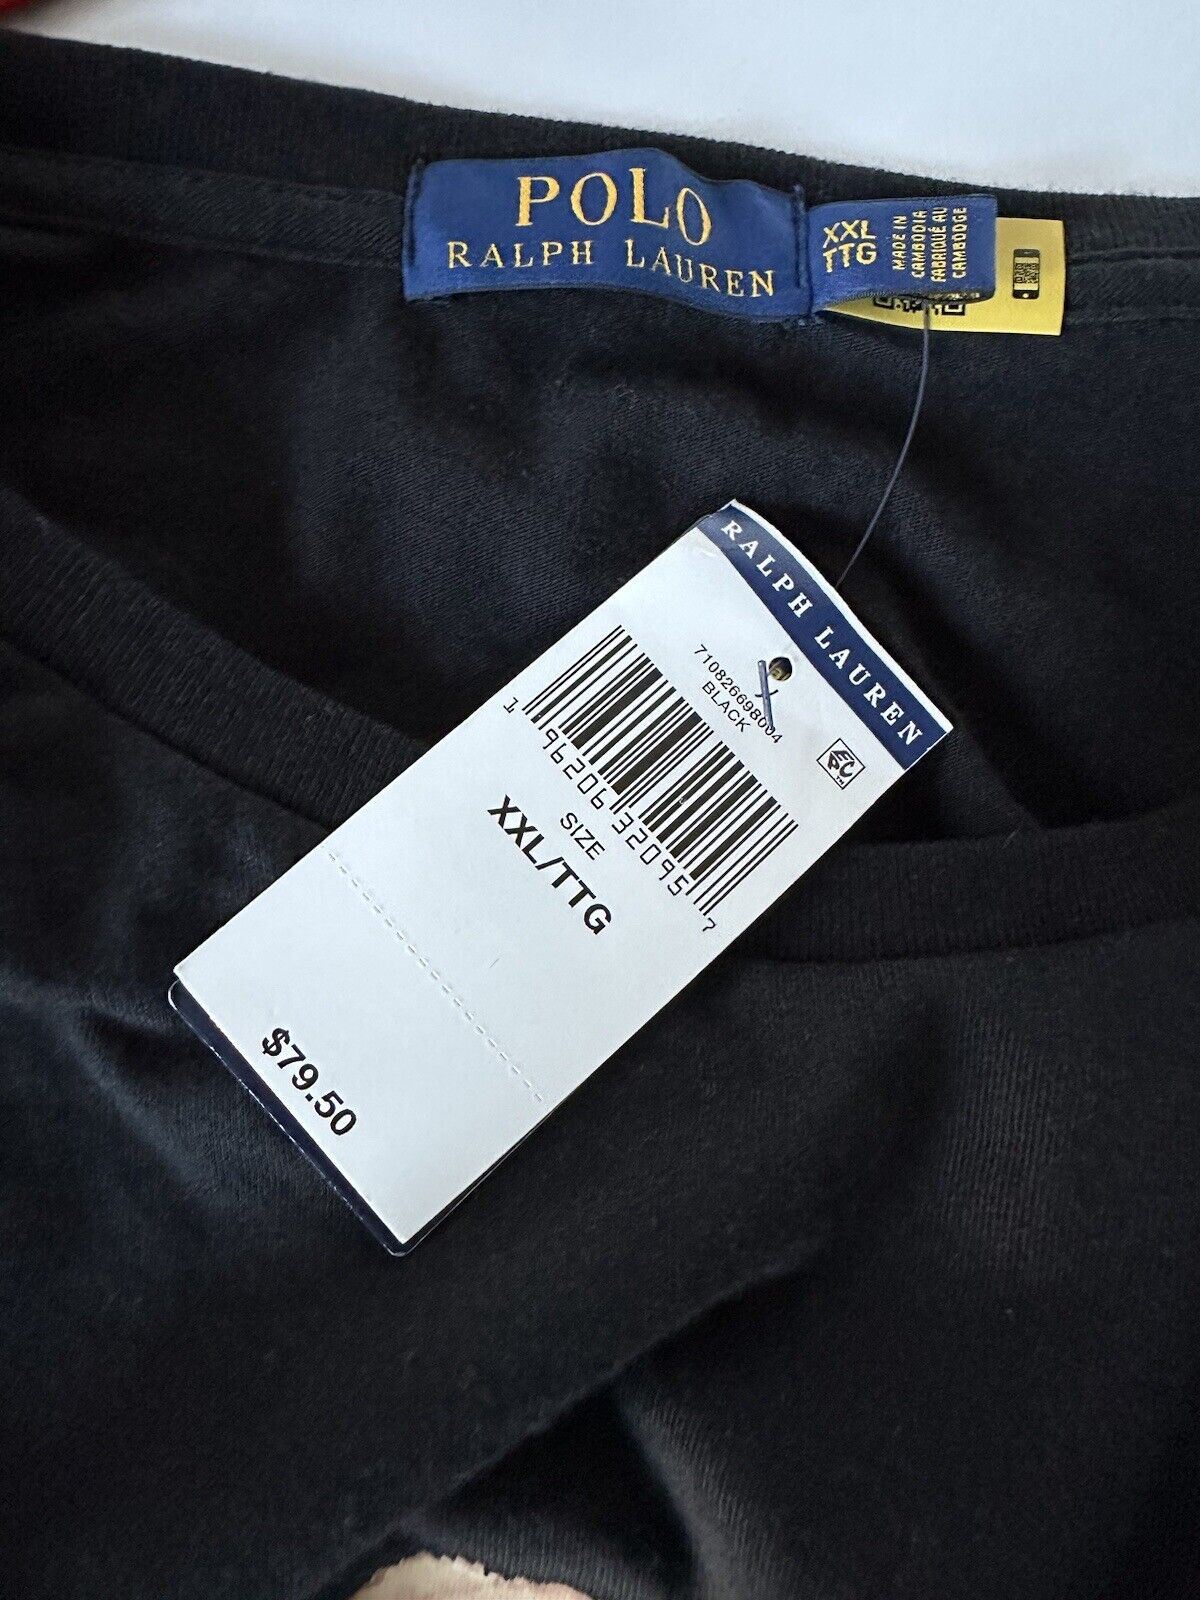 NWT $79,50 Polo Ralph Lauren футболка с медведем с длинными рукавами, черная, 2XL 